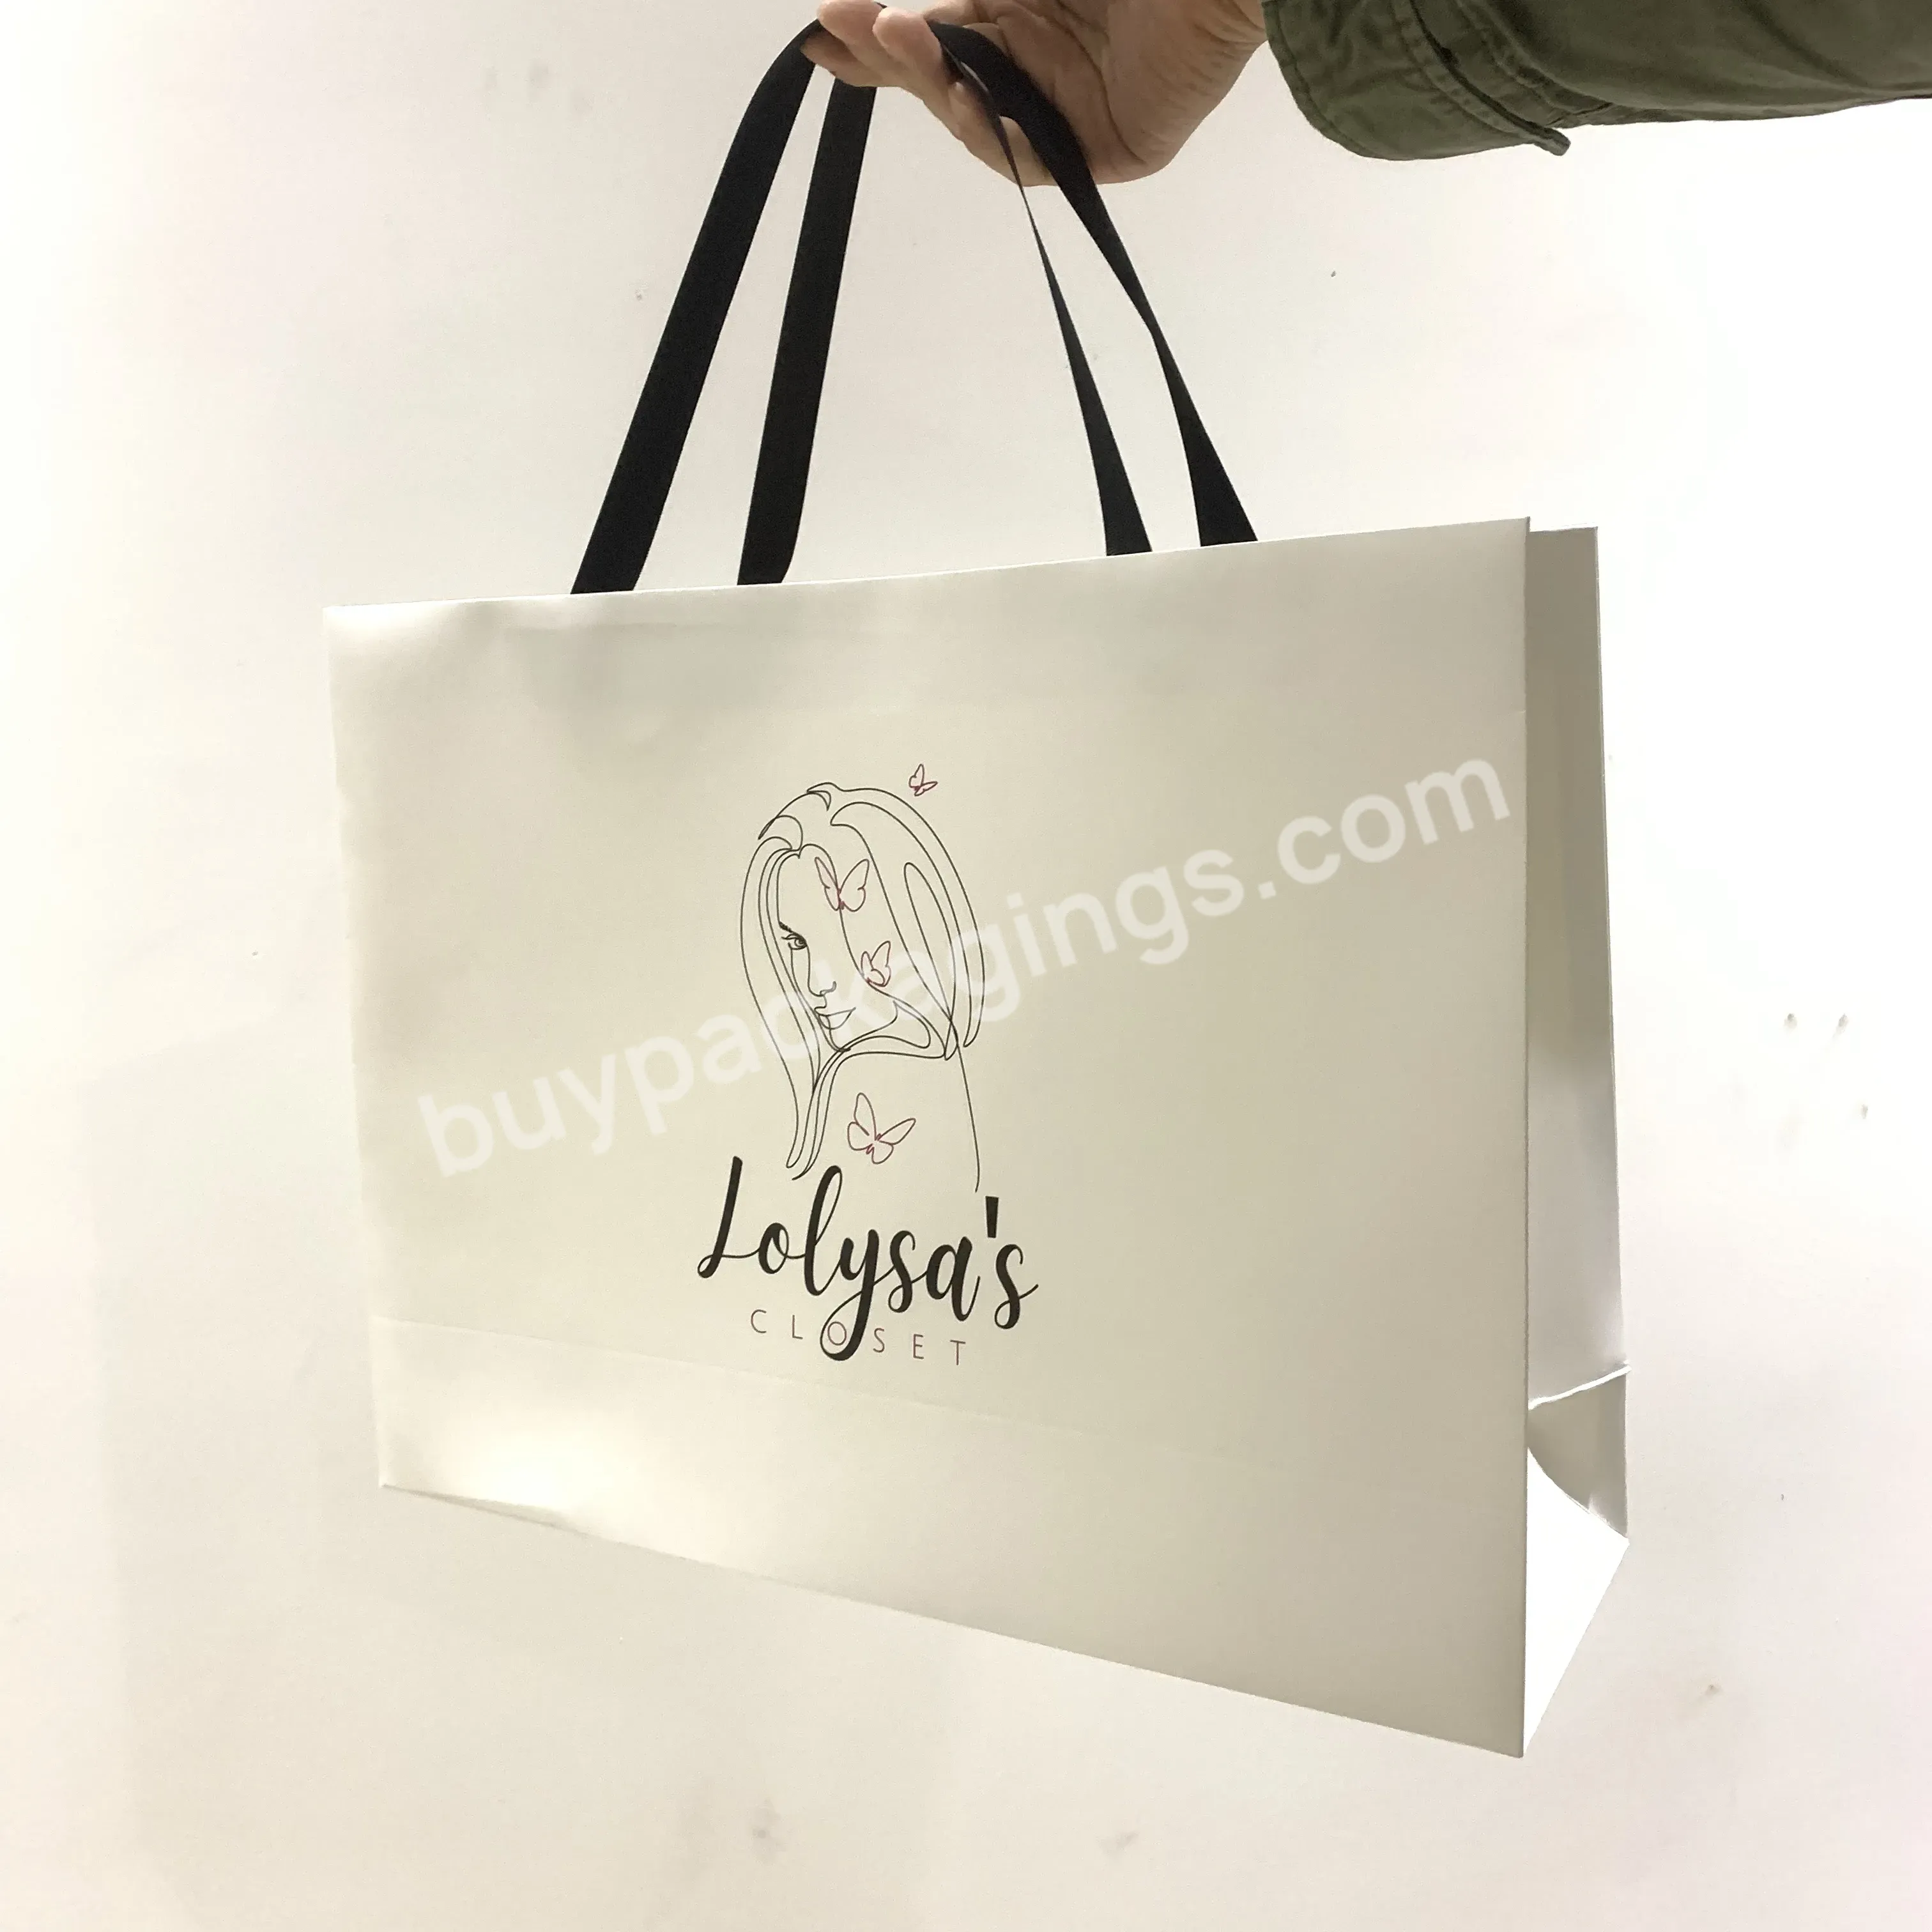 Custom Printed Gift Shopping Kraft Paper Bags With Your Own Logo - Buy Paper Bags,Paper Bags With Your Own Logo,Custom Printed Gift Shopping Kraft Paper Bags With Your Own Logo.